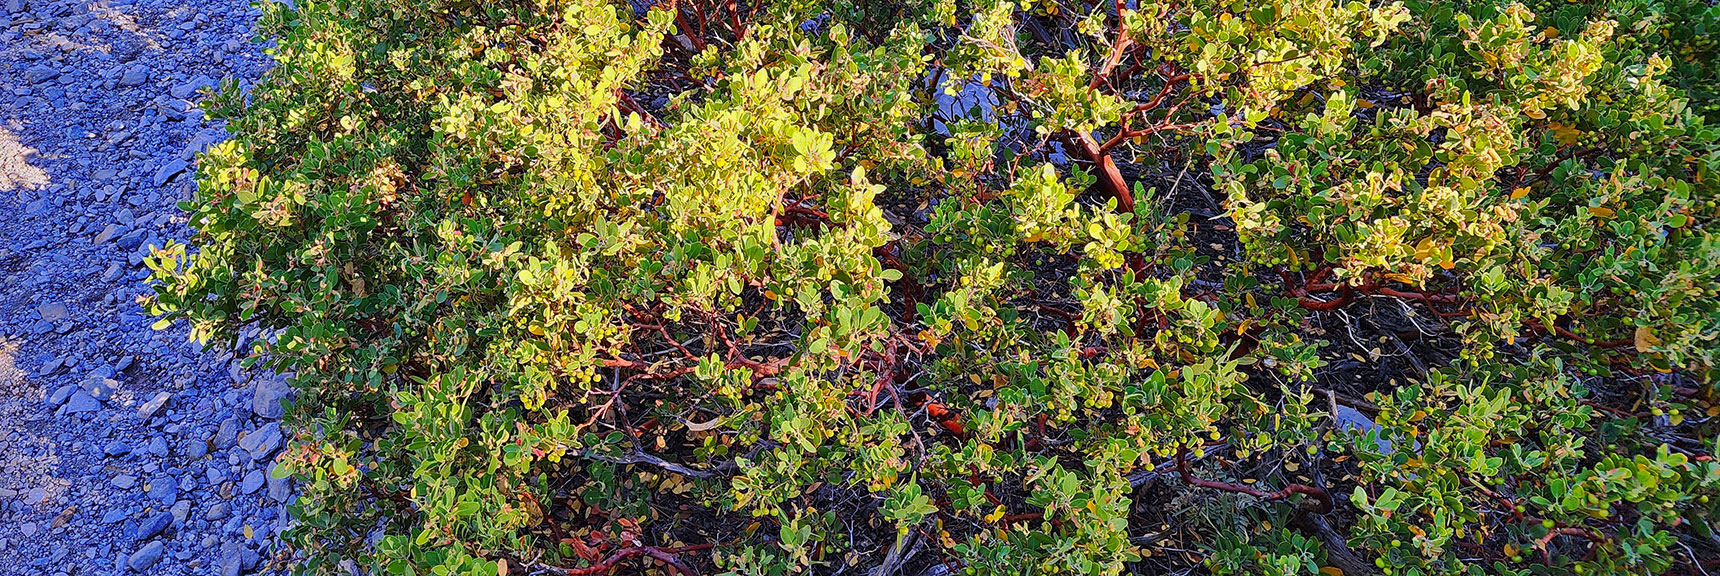 Pointed-Leaf Manzanita, Common Plant at This Elevation in The Spring Mountains. | Fletcher Canyon / Fletcher Peak / Cockscomb Ridge Circuit | Mt. Charleston Wilderness | Spring Mountains, Nevada